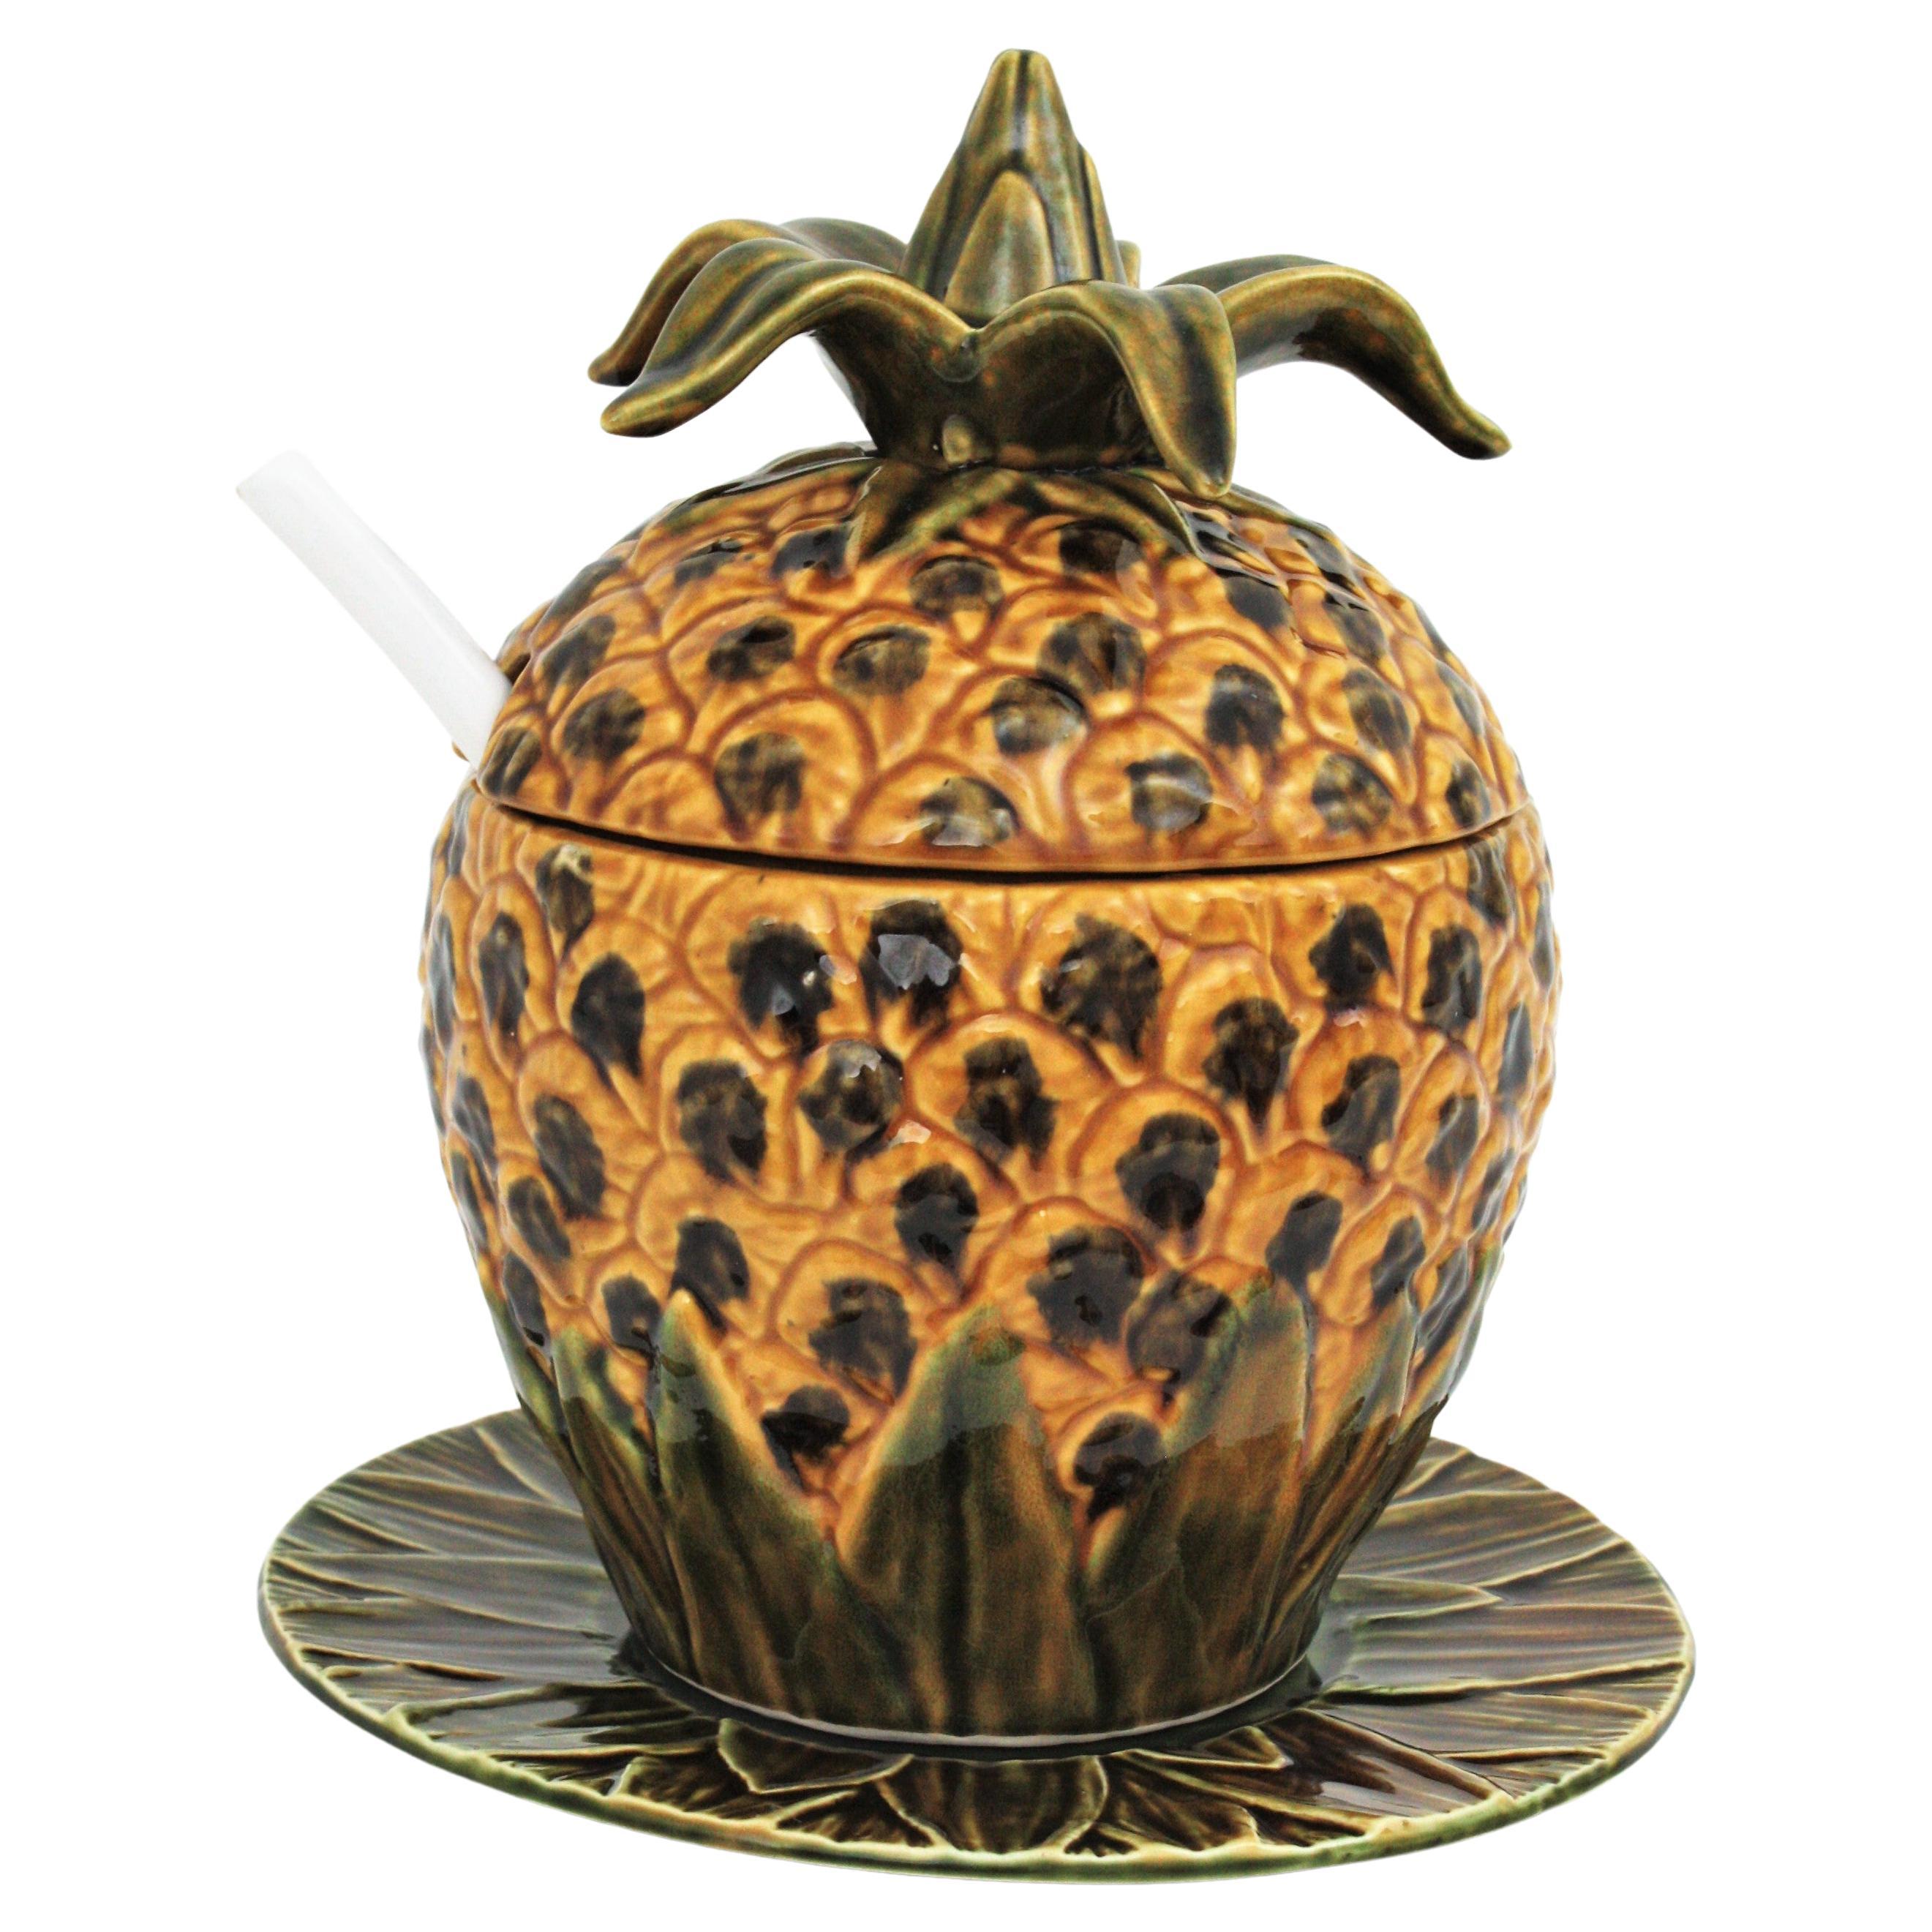 Midcentury Pineapple XL Tureen Centerpiece in Glazed Ceramic, 1960s